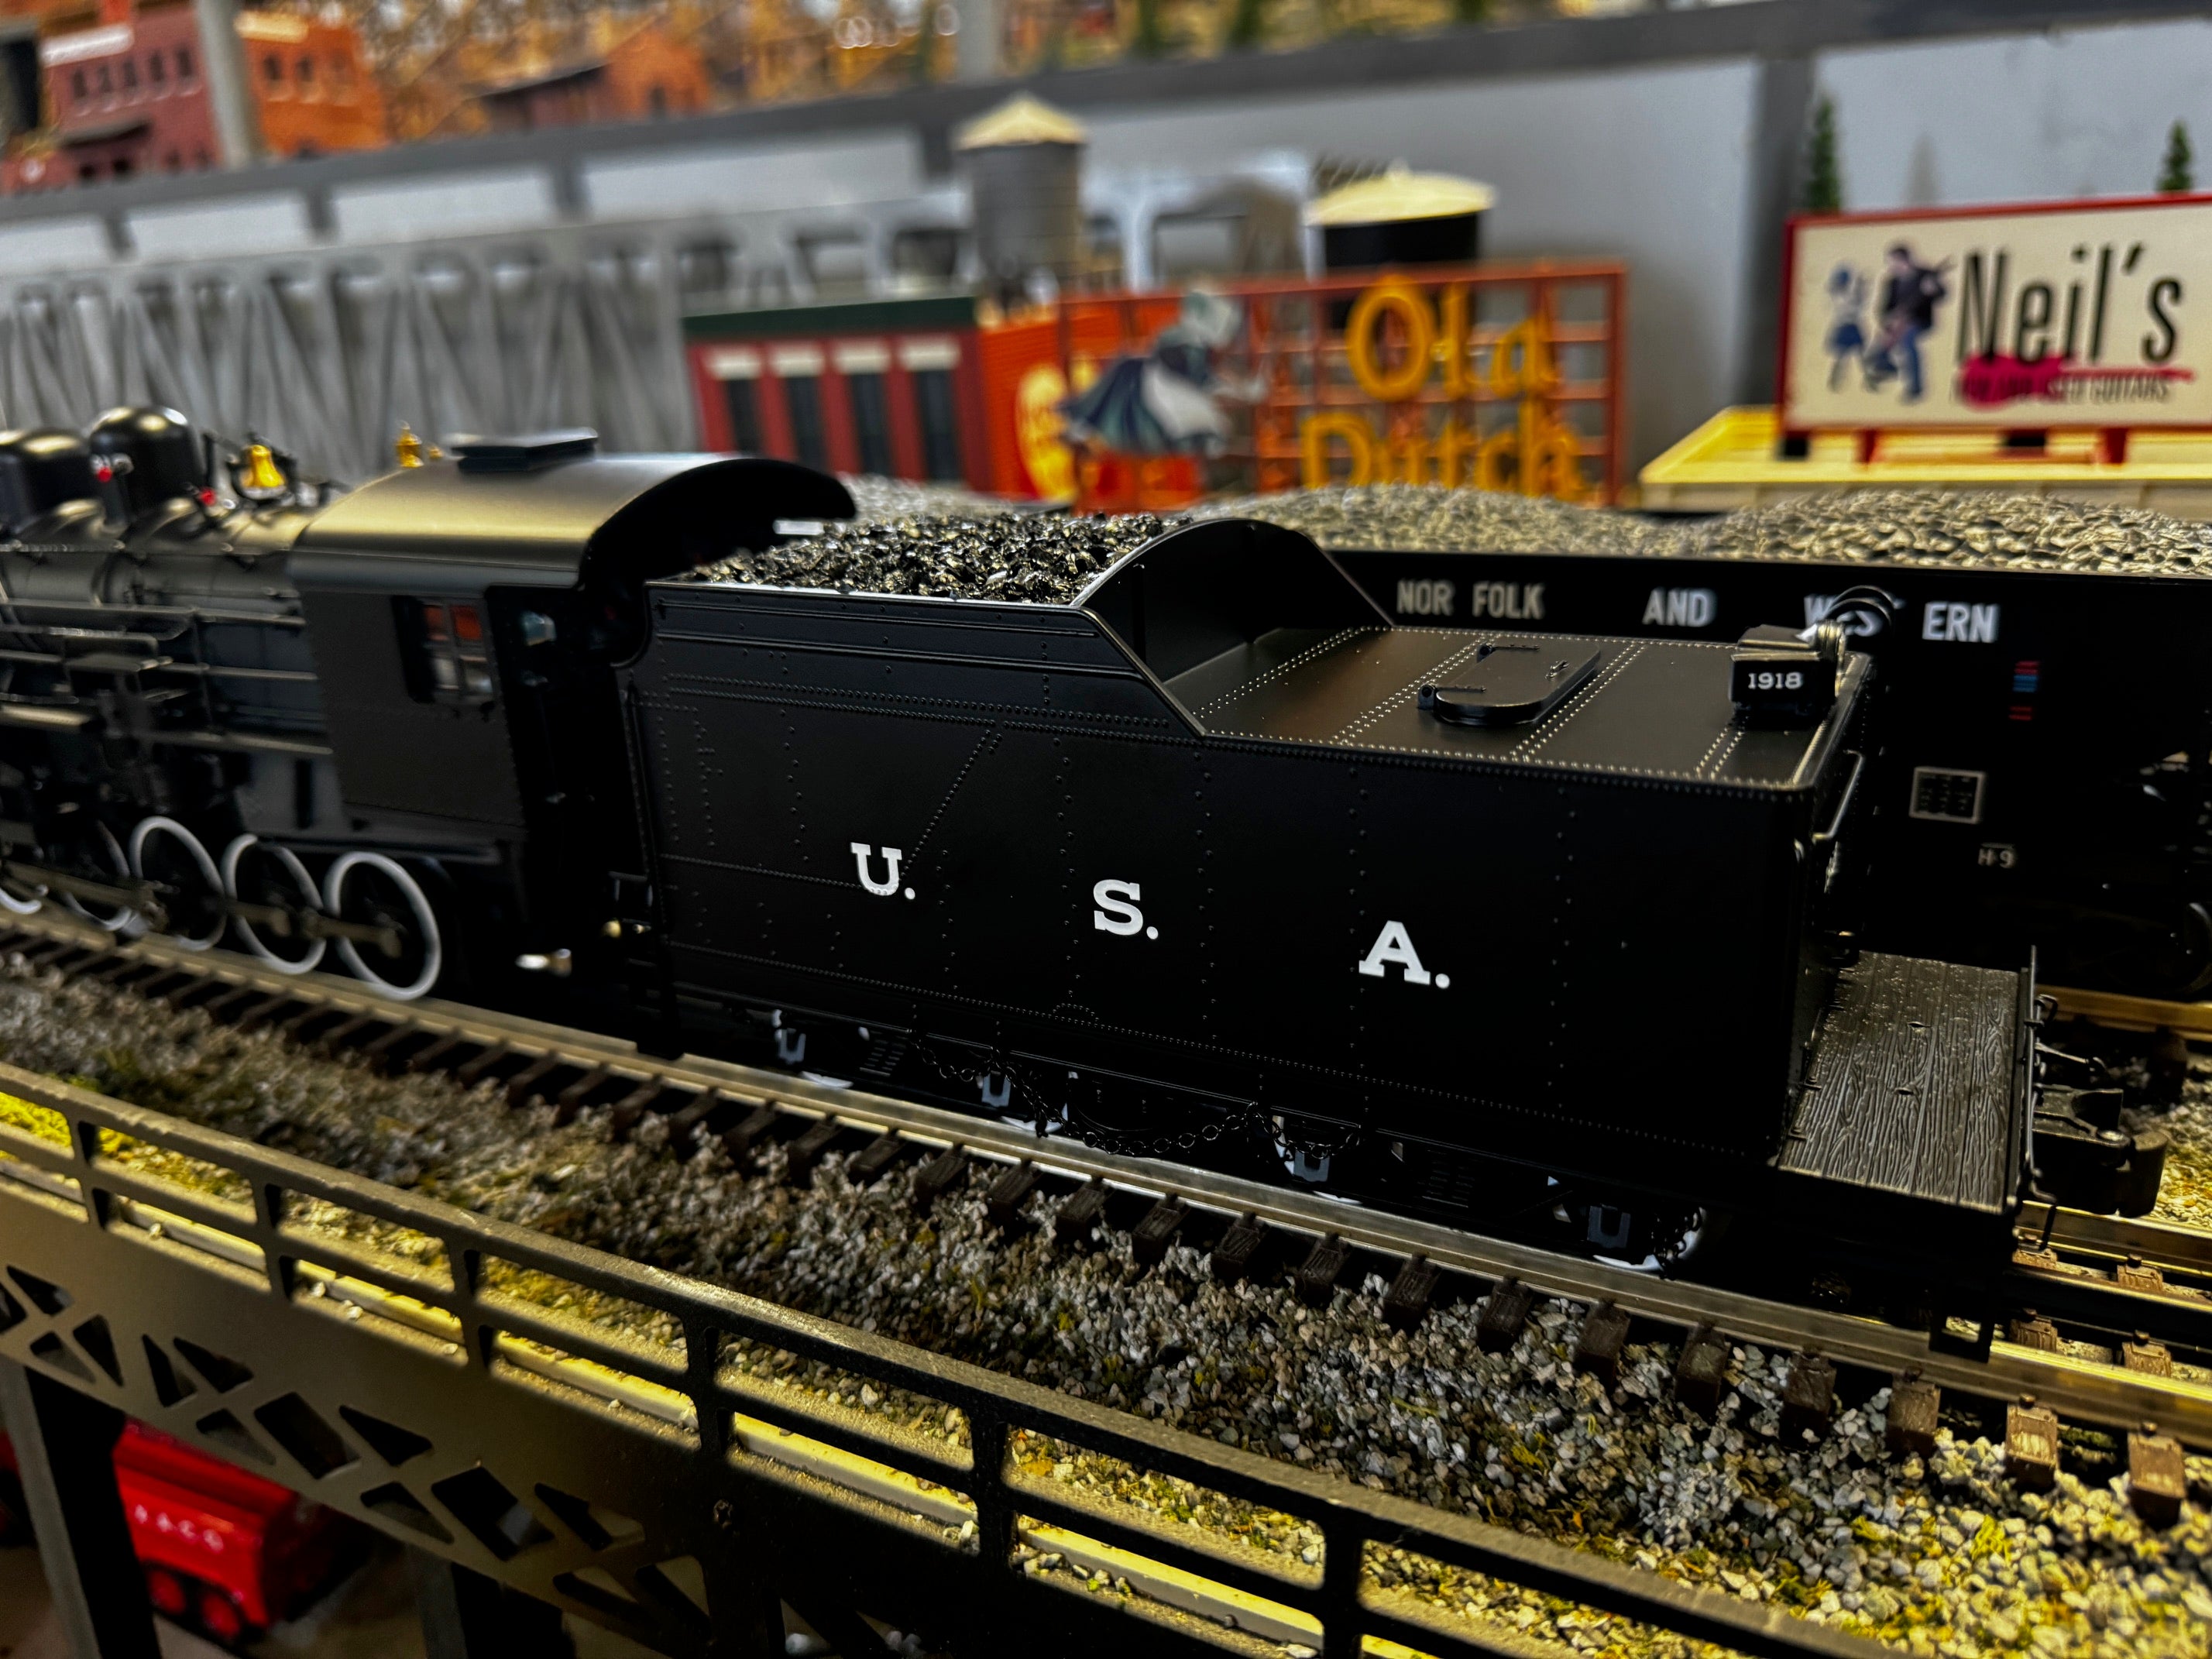 Lionel 2331350 - Legacy Russian Decapod Steam Locomotive "U.S.A." #1918